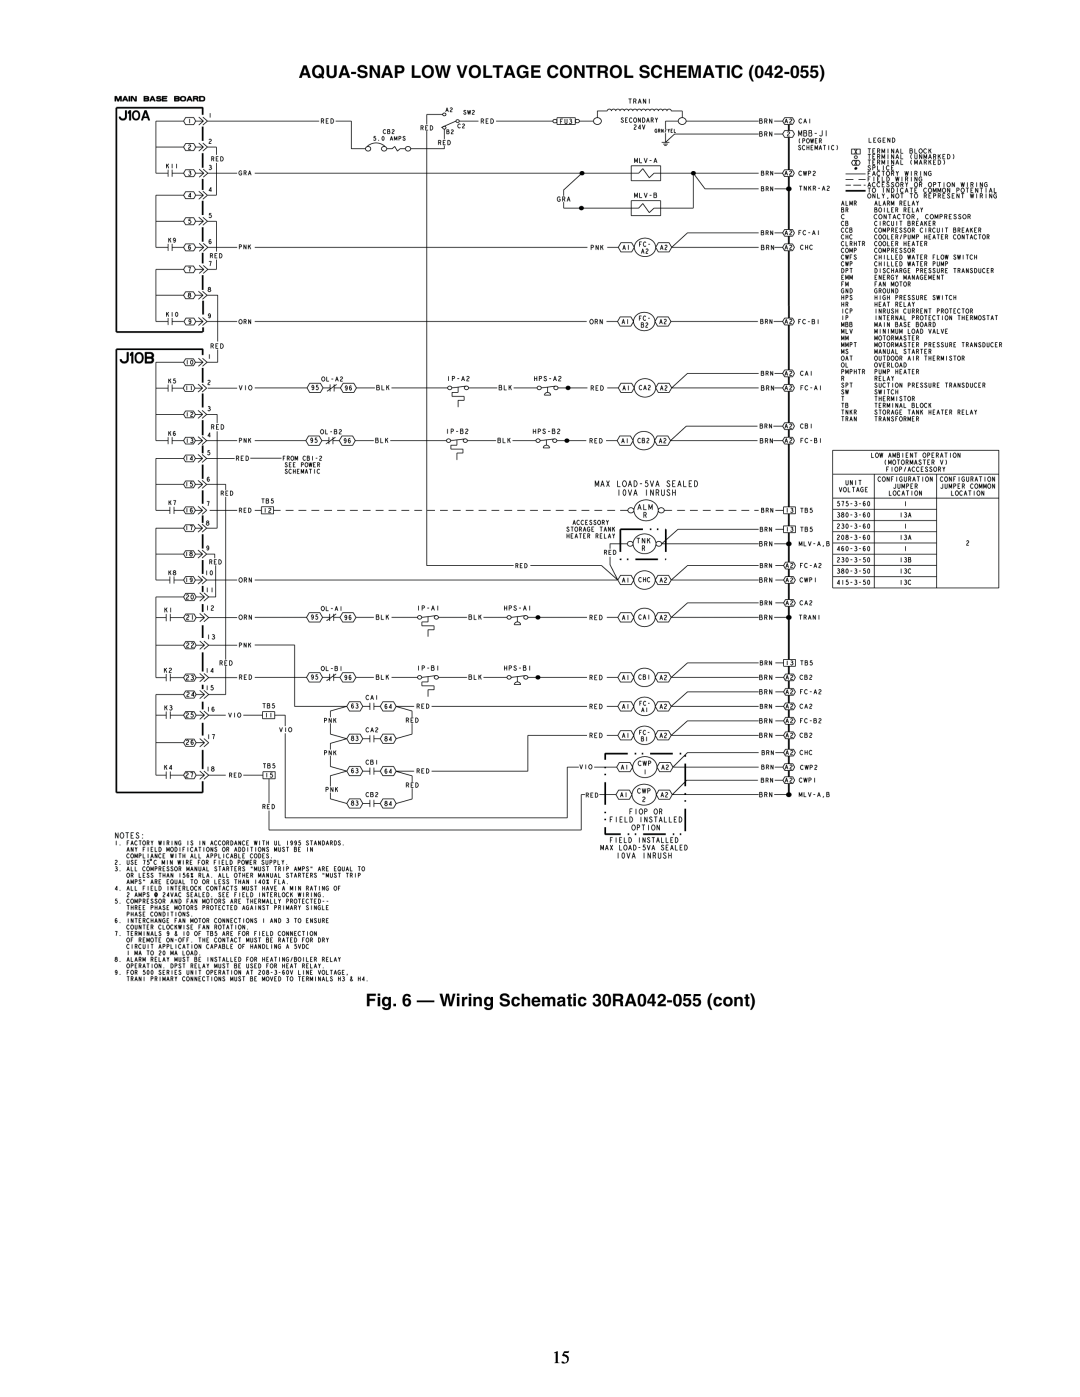 Sterling 30RA010-055 manual Wiring Schematic 30RA042-055cont, Aqua-Snaplow Voltage Control Schematic 